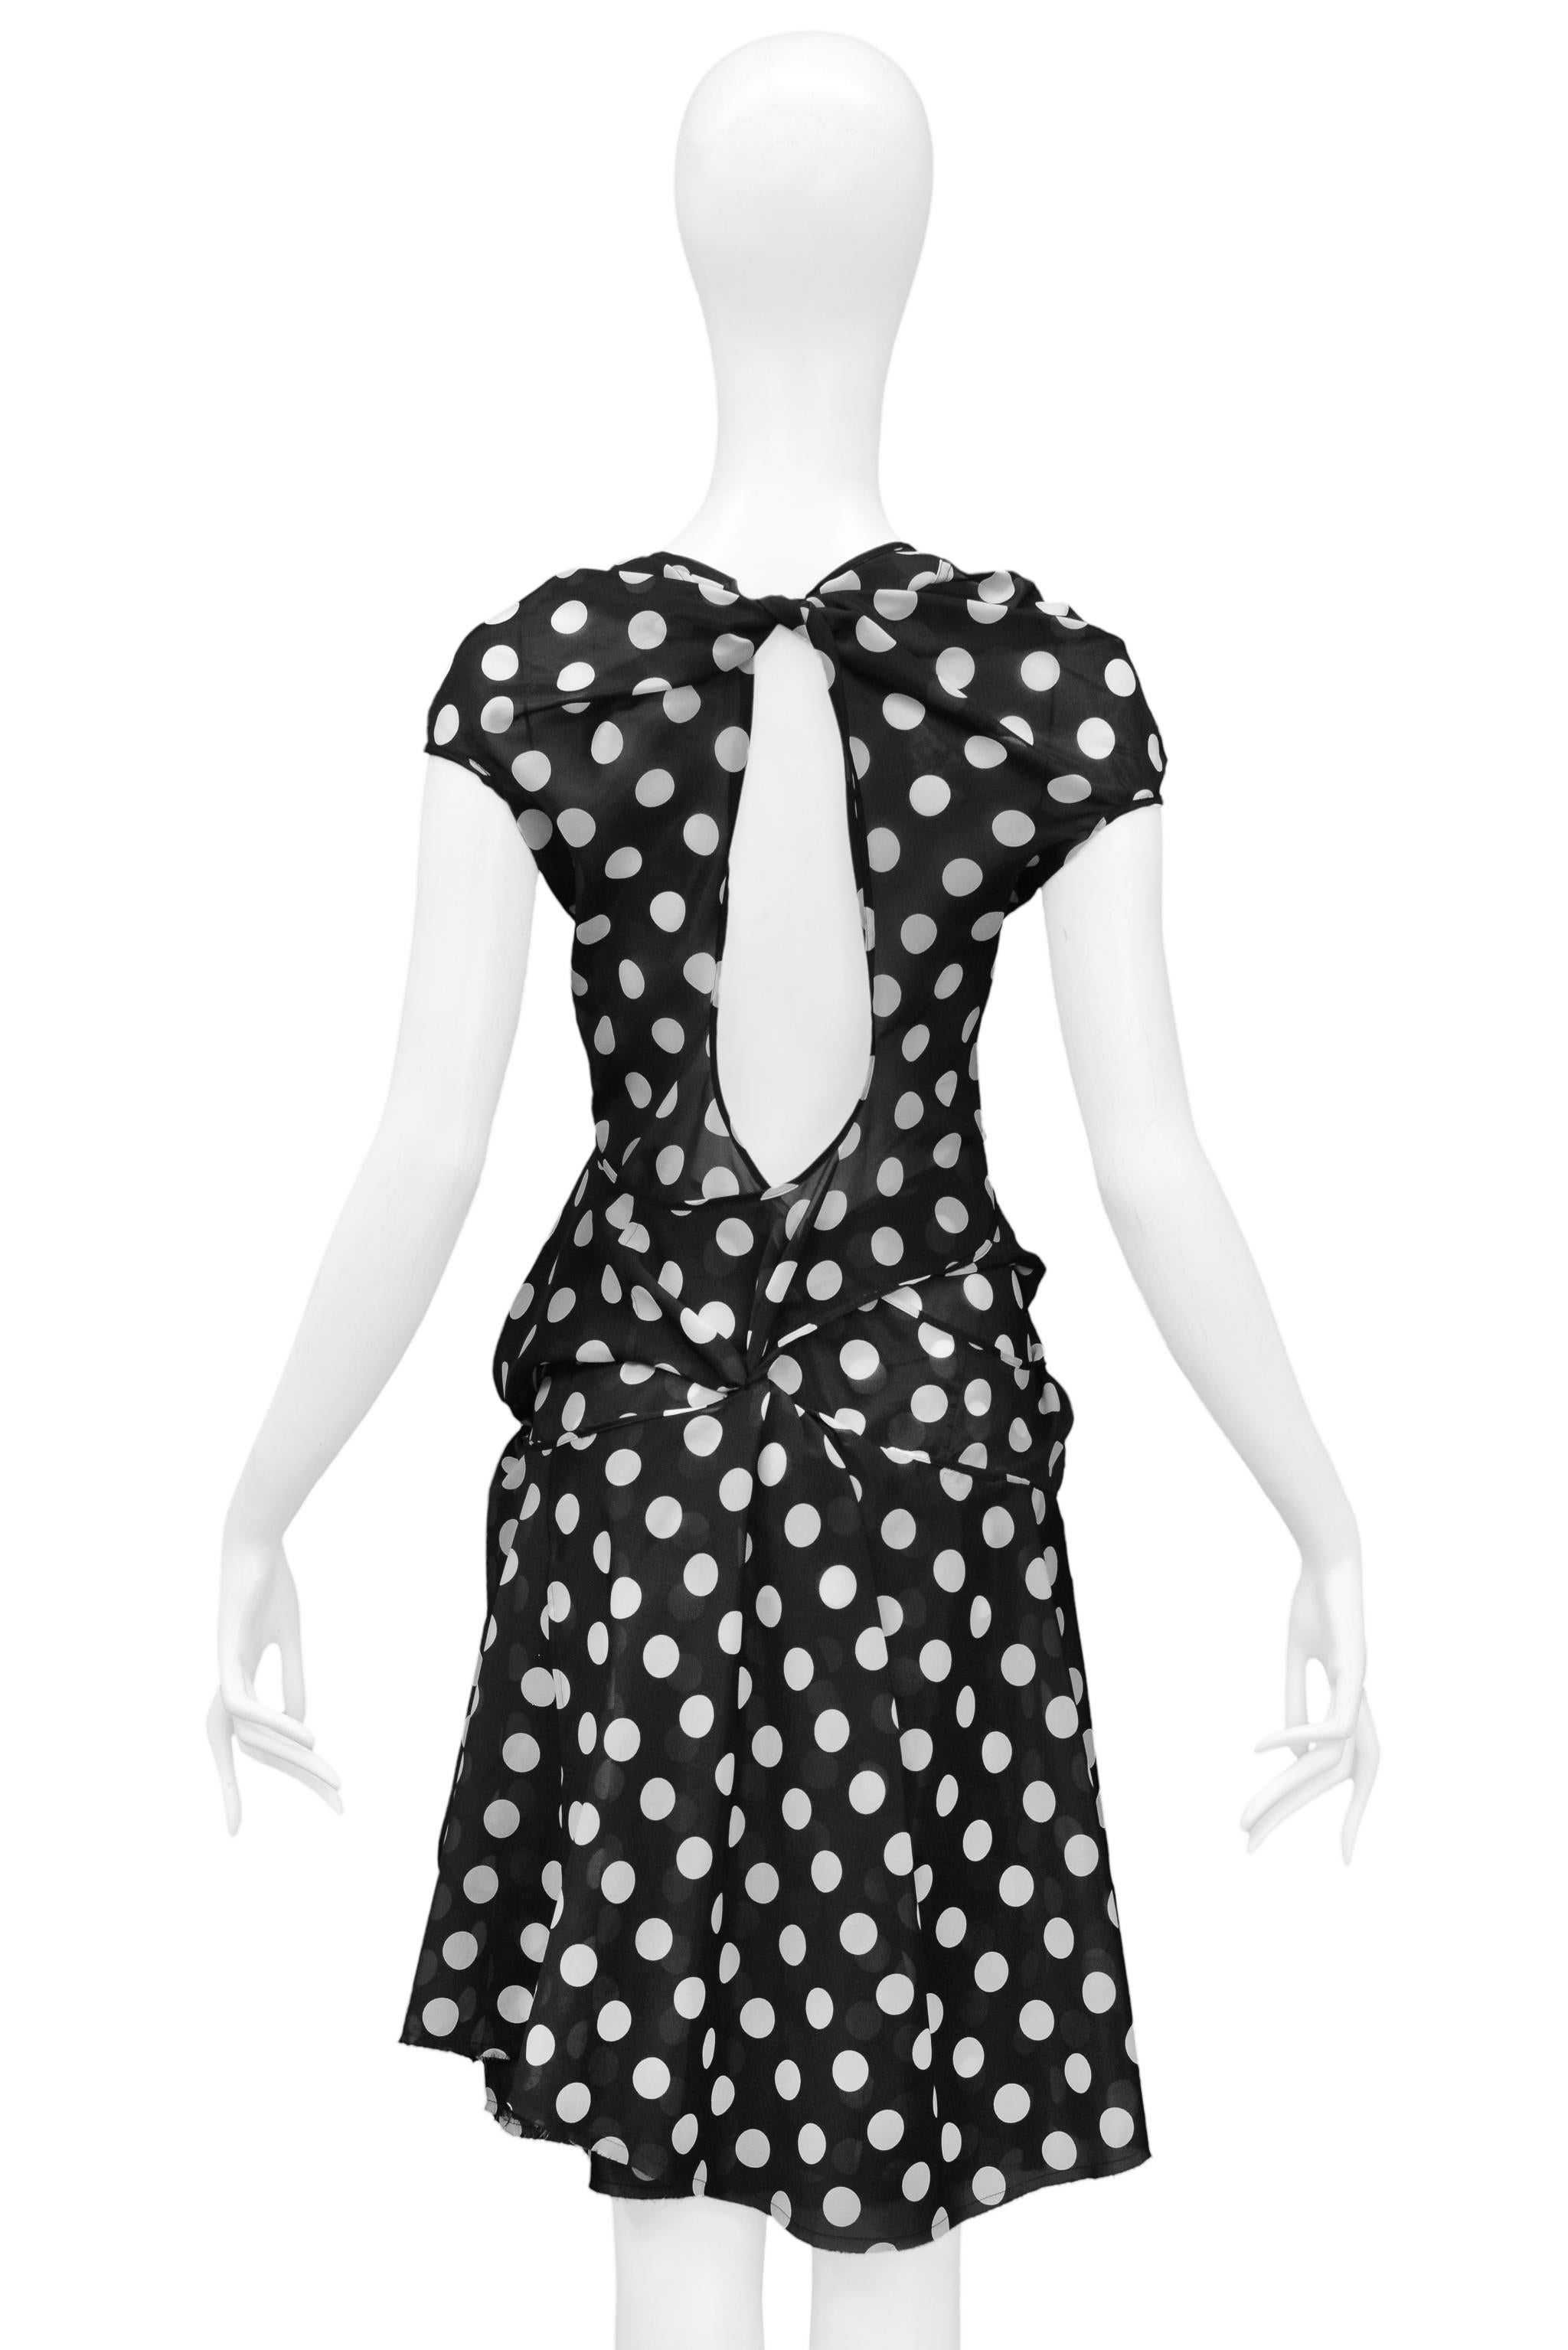 Junya Watanabe Black & White Polka Dot Concept Dress 2004 For Sale 3